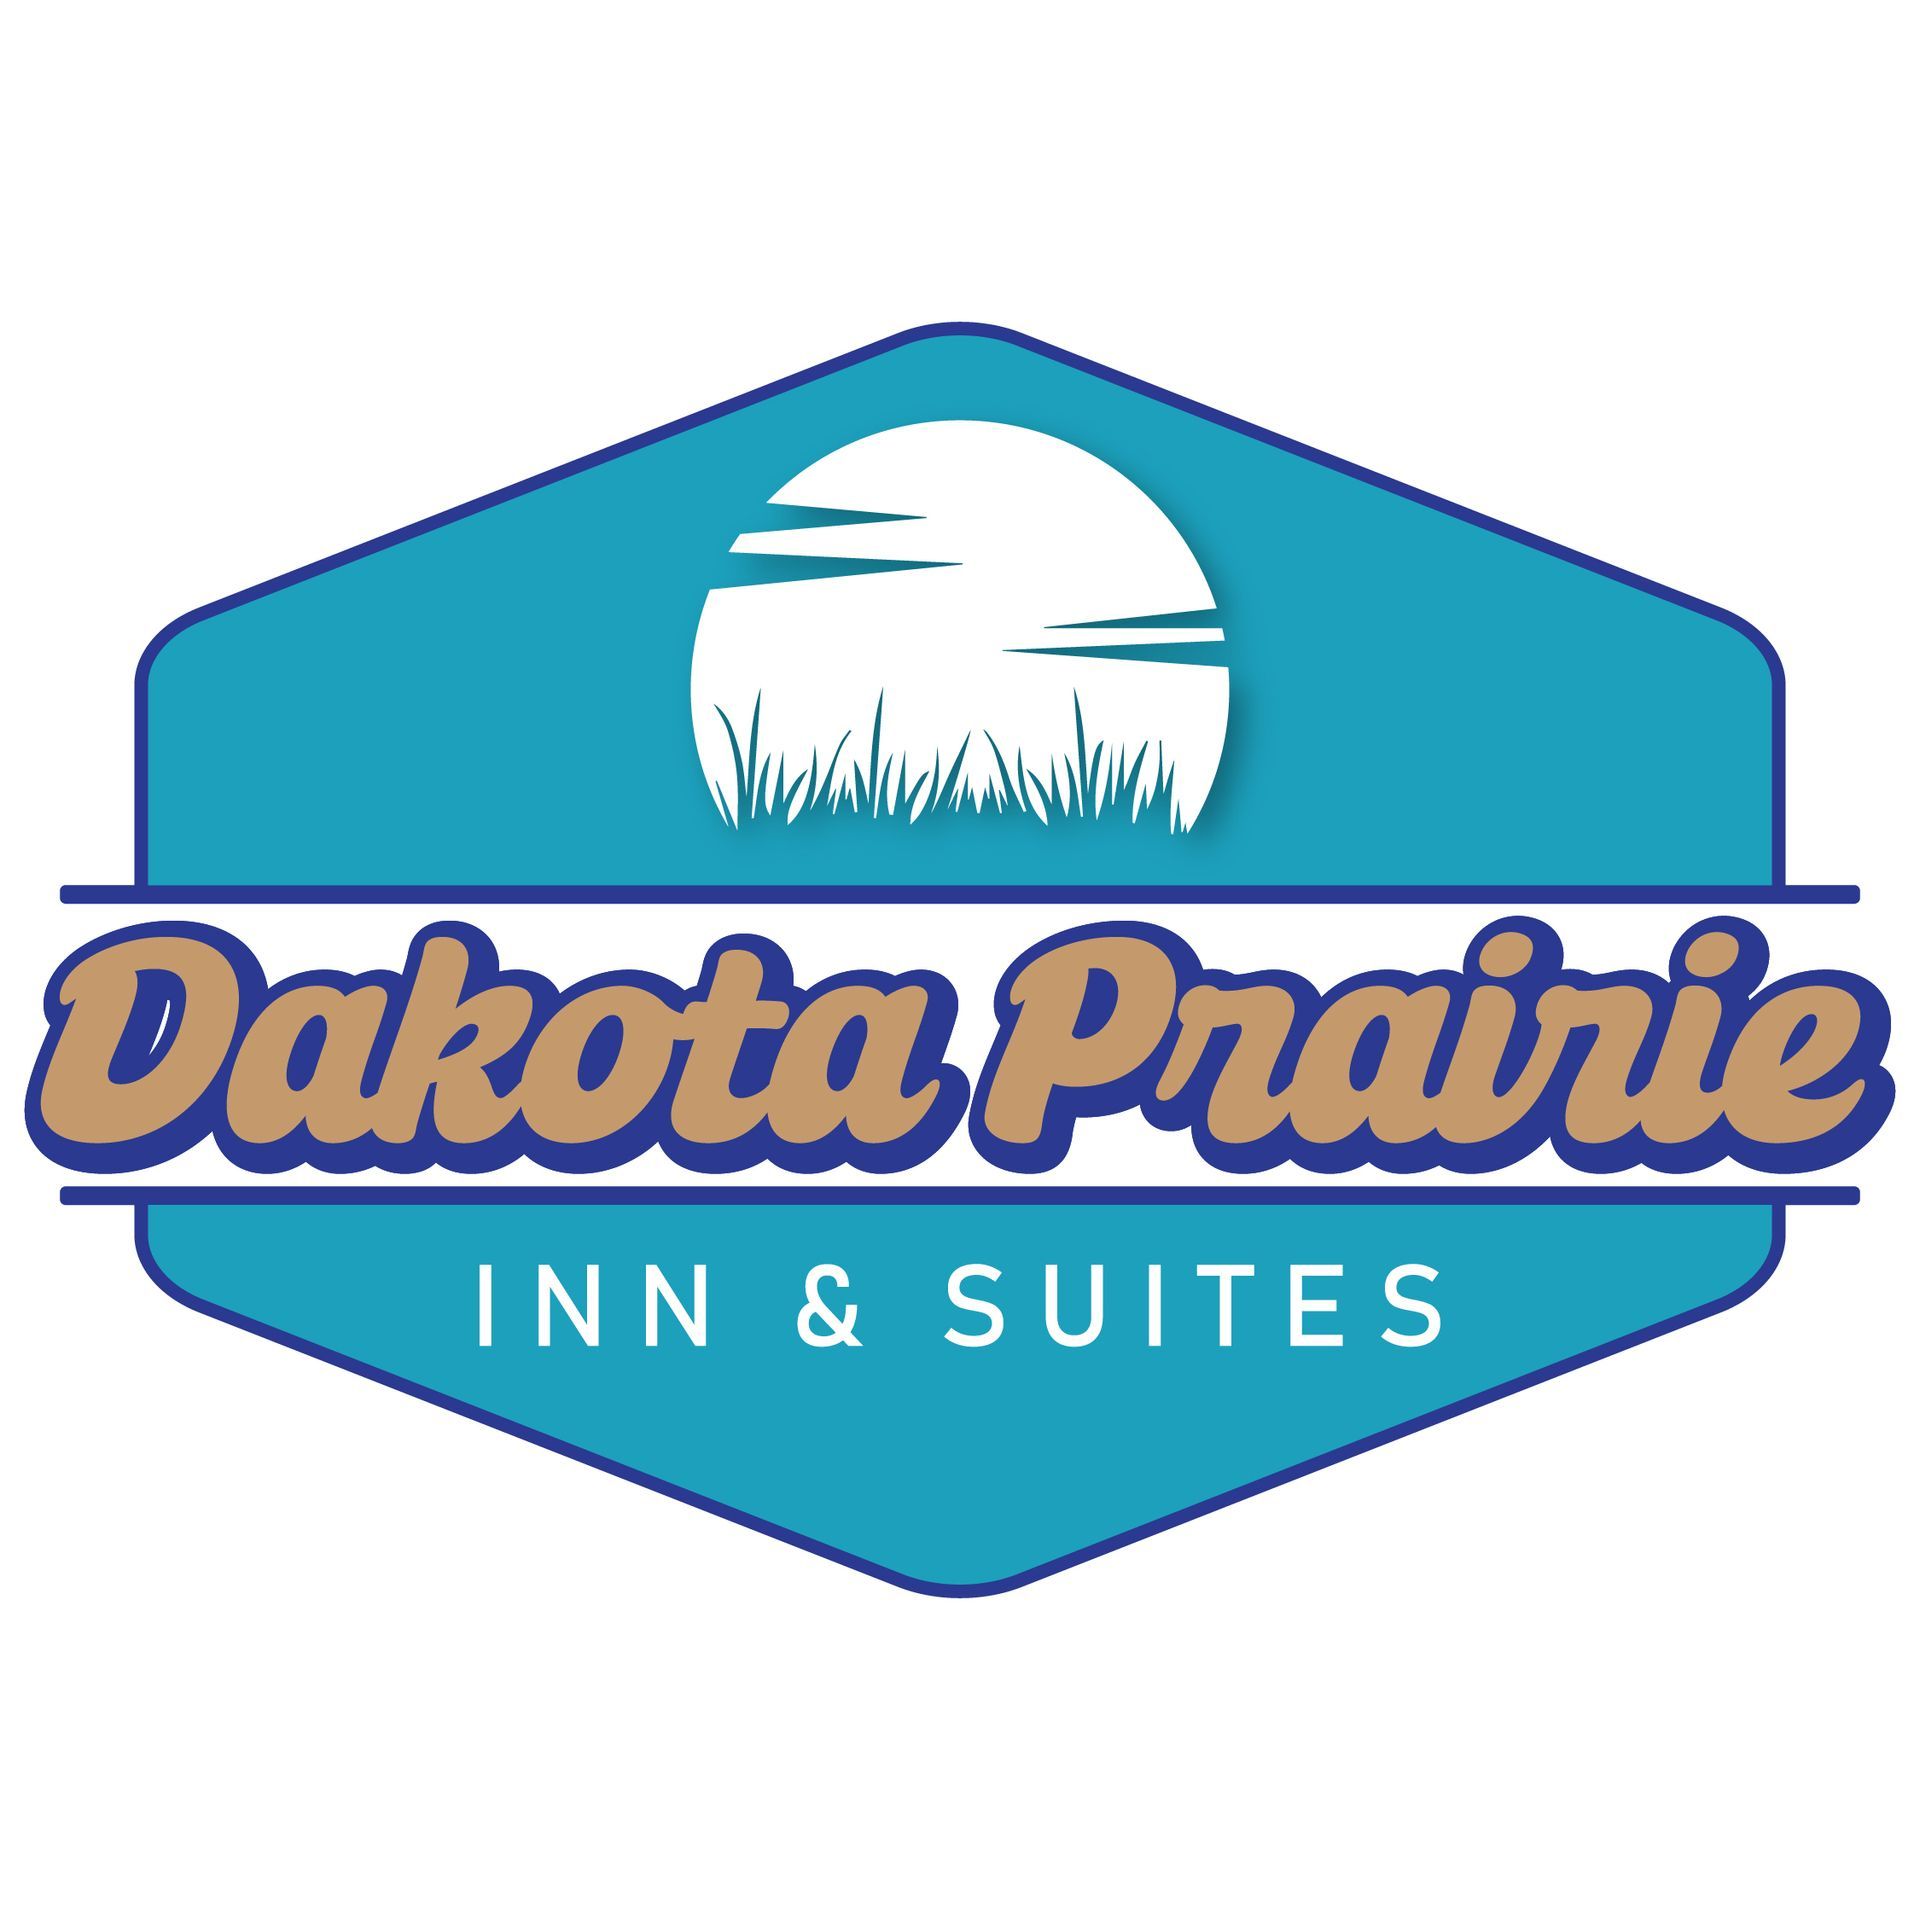 Dakota Prairie Inn & Suites logo